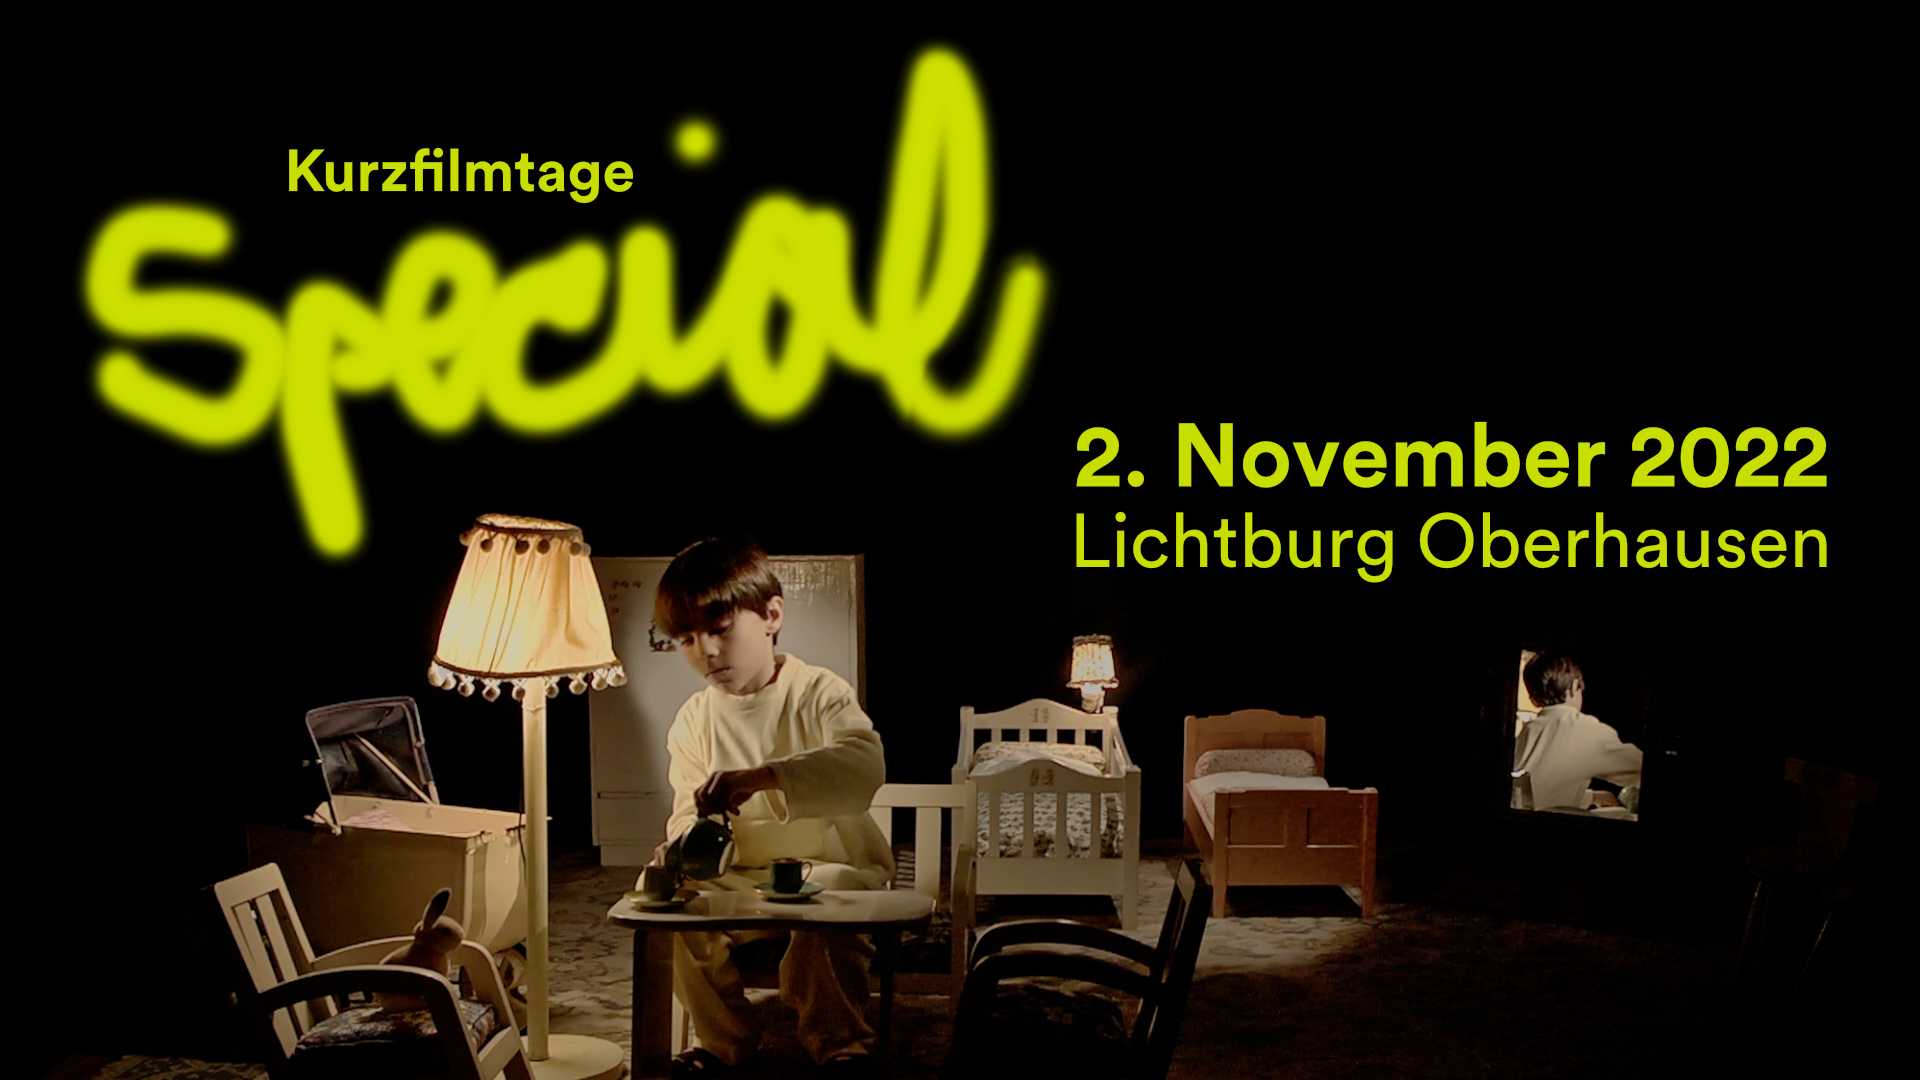 Kurzfilmtage Special am 2. November 2022